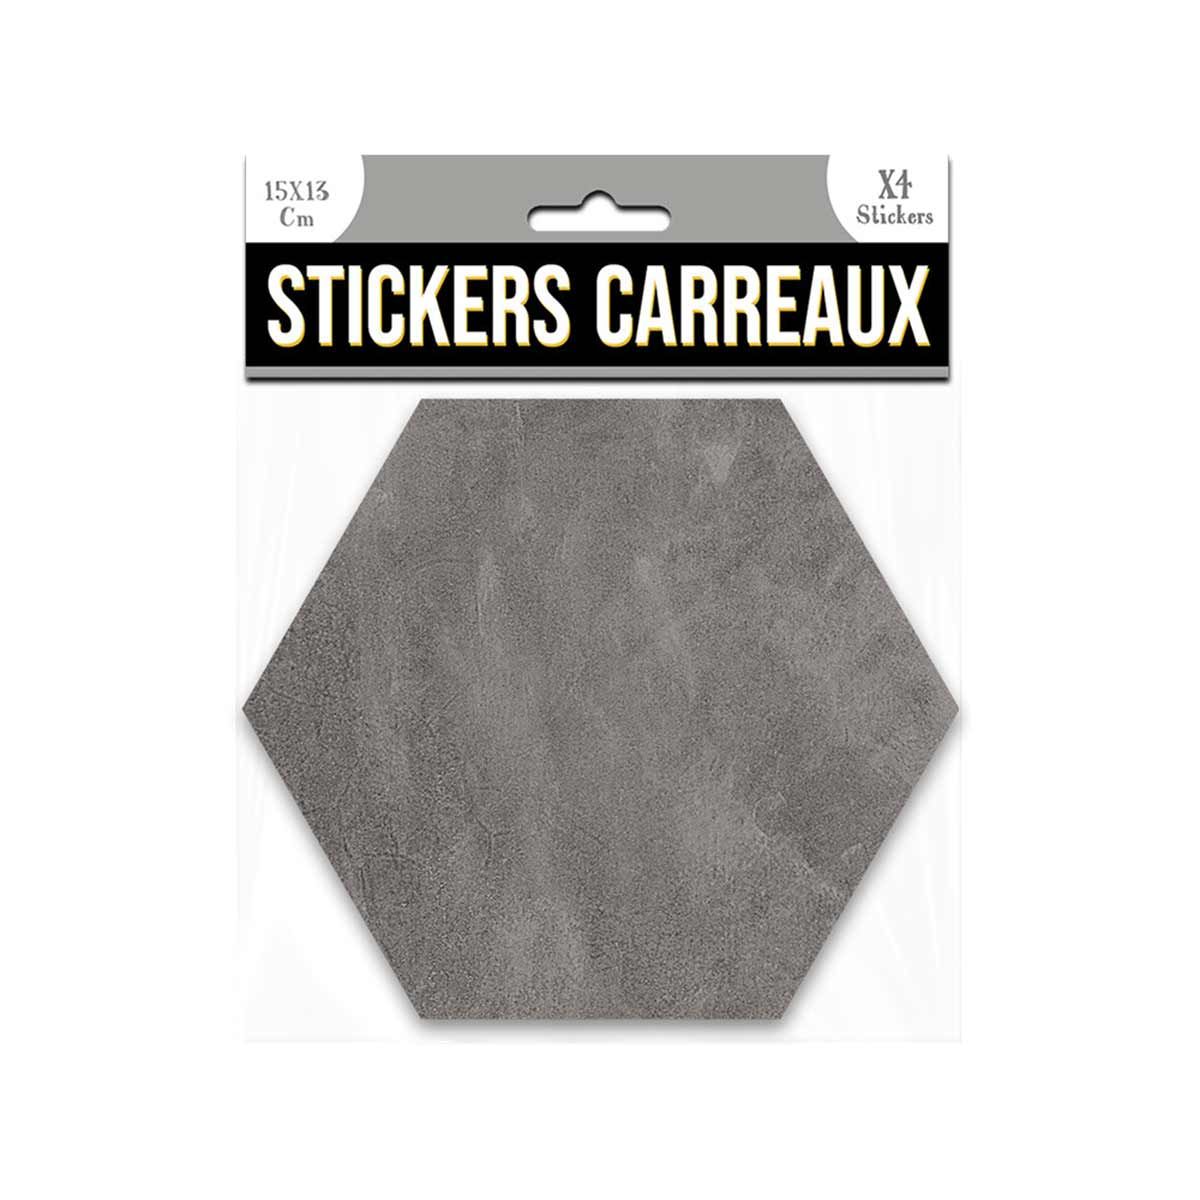 4 stickers carreaux HEXAGONE 15 x 13 cm